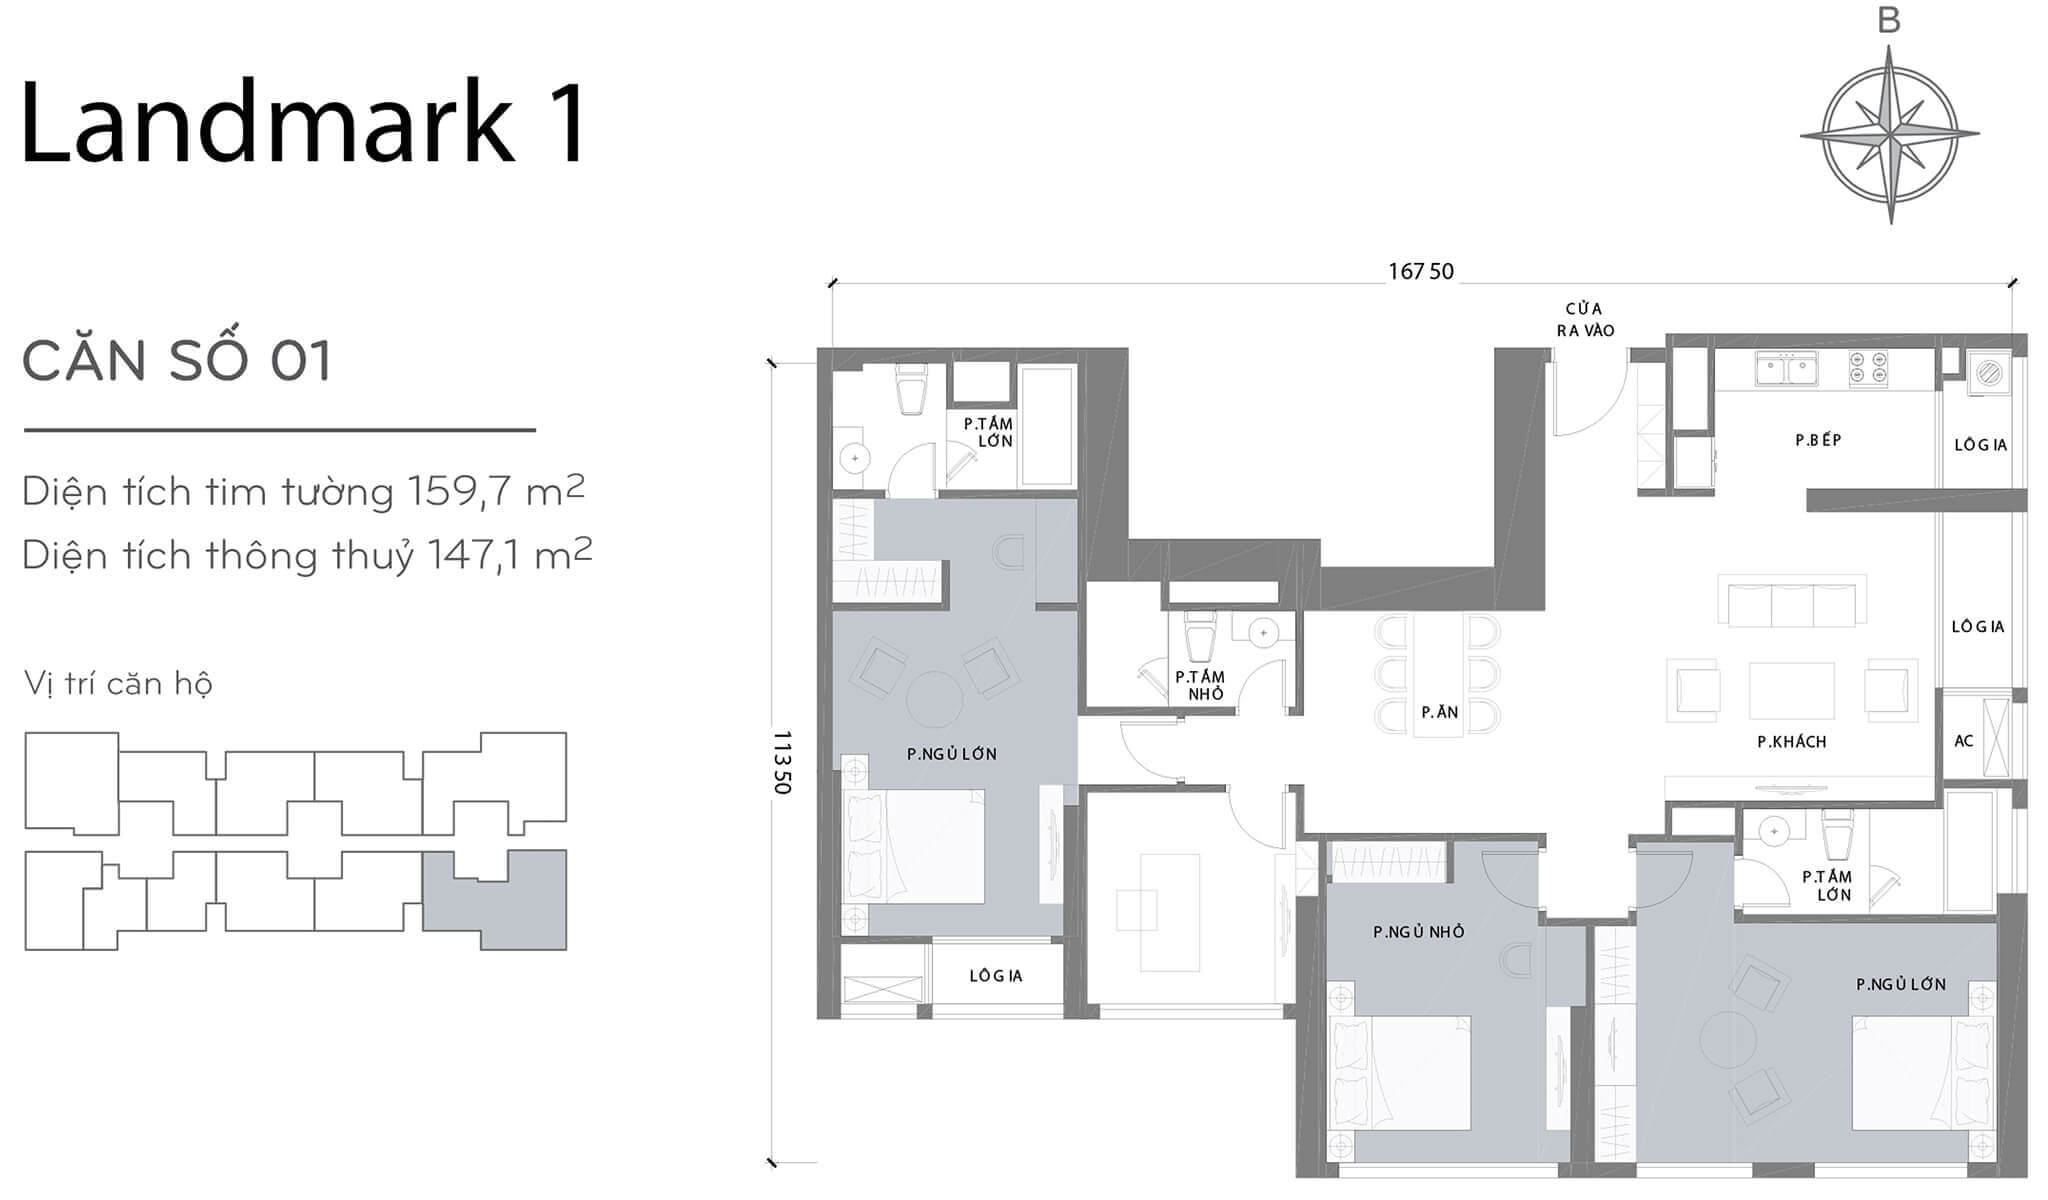 layout căn hộ số 1 Landmark 1 L1-01